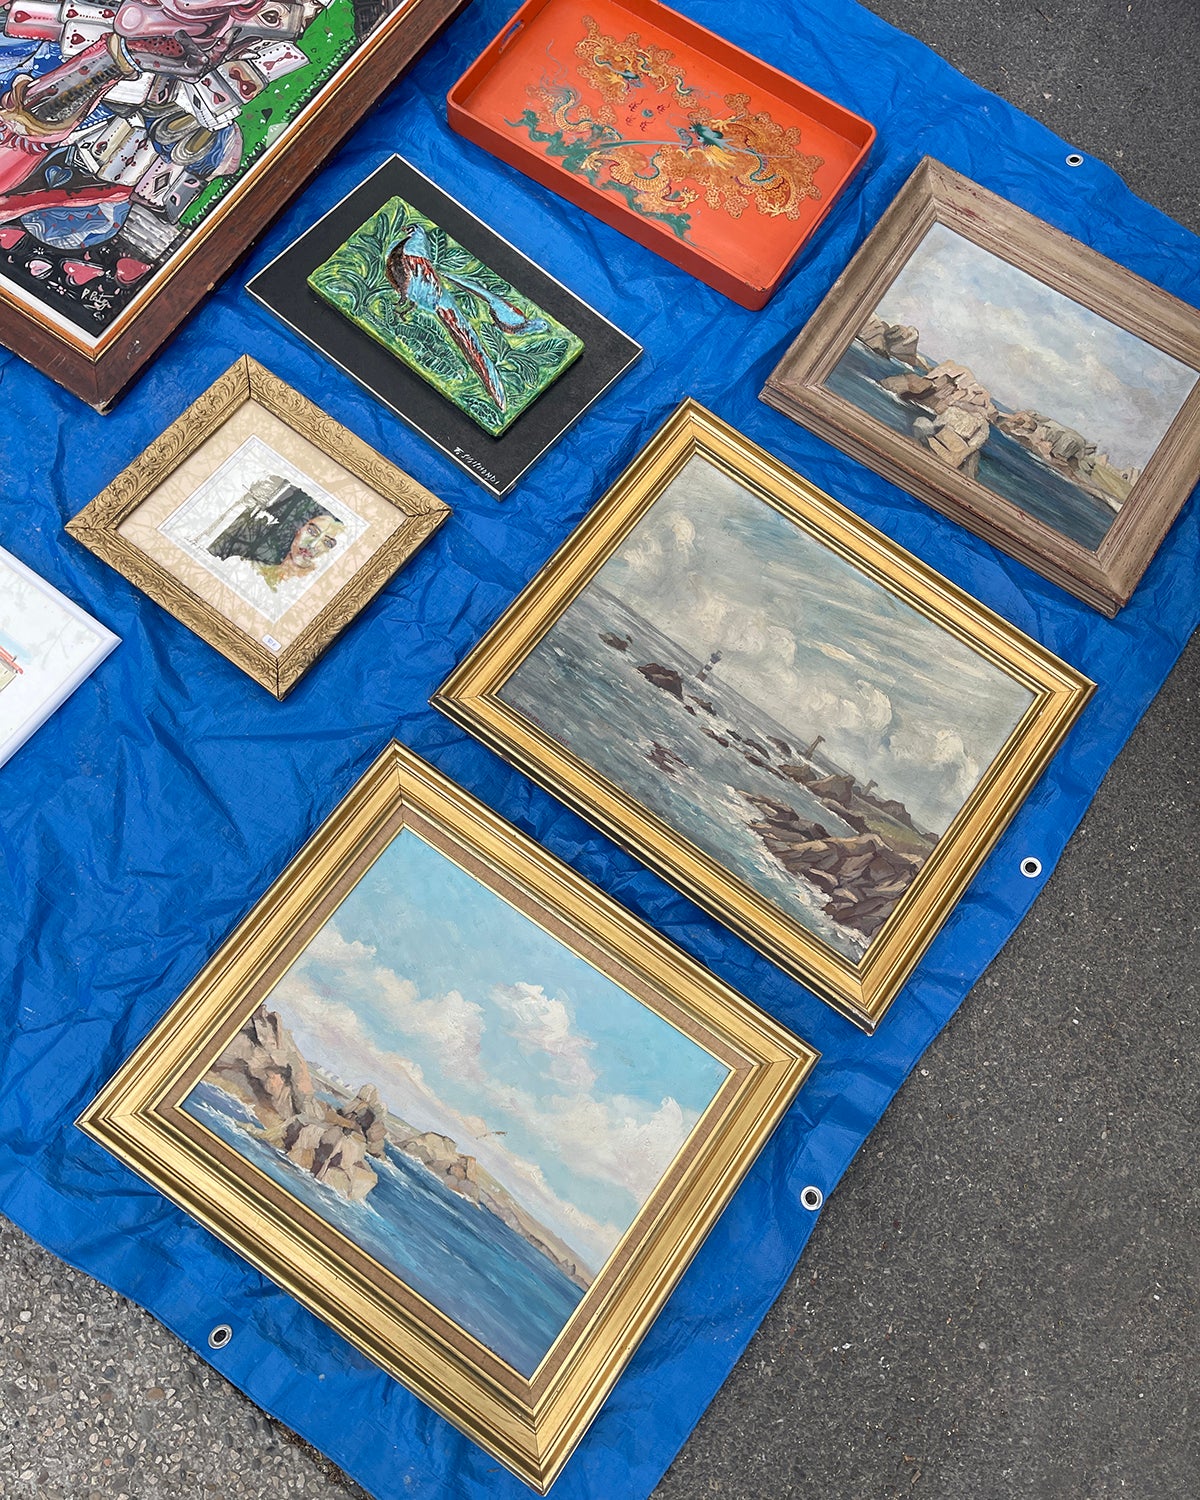 Framed artwork on a table at a flea market